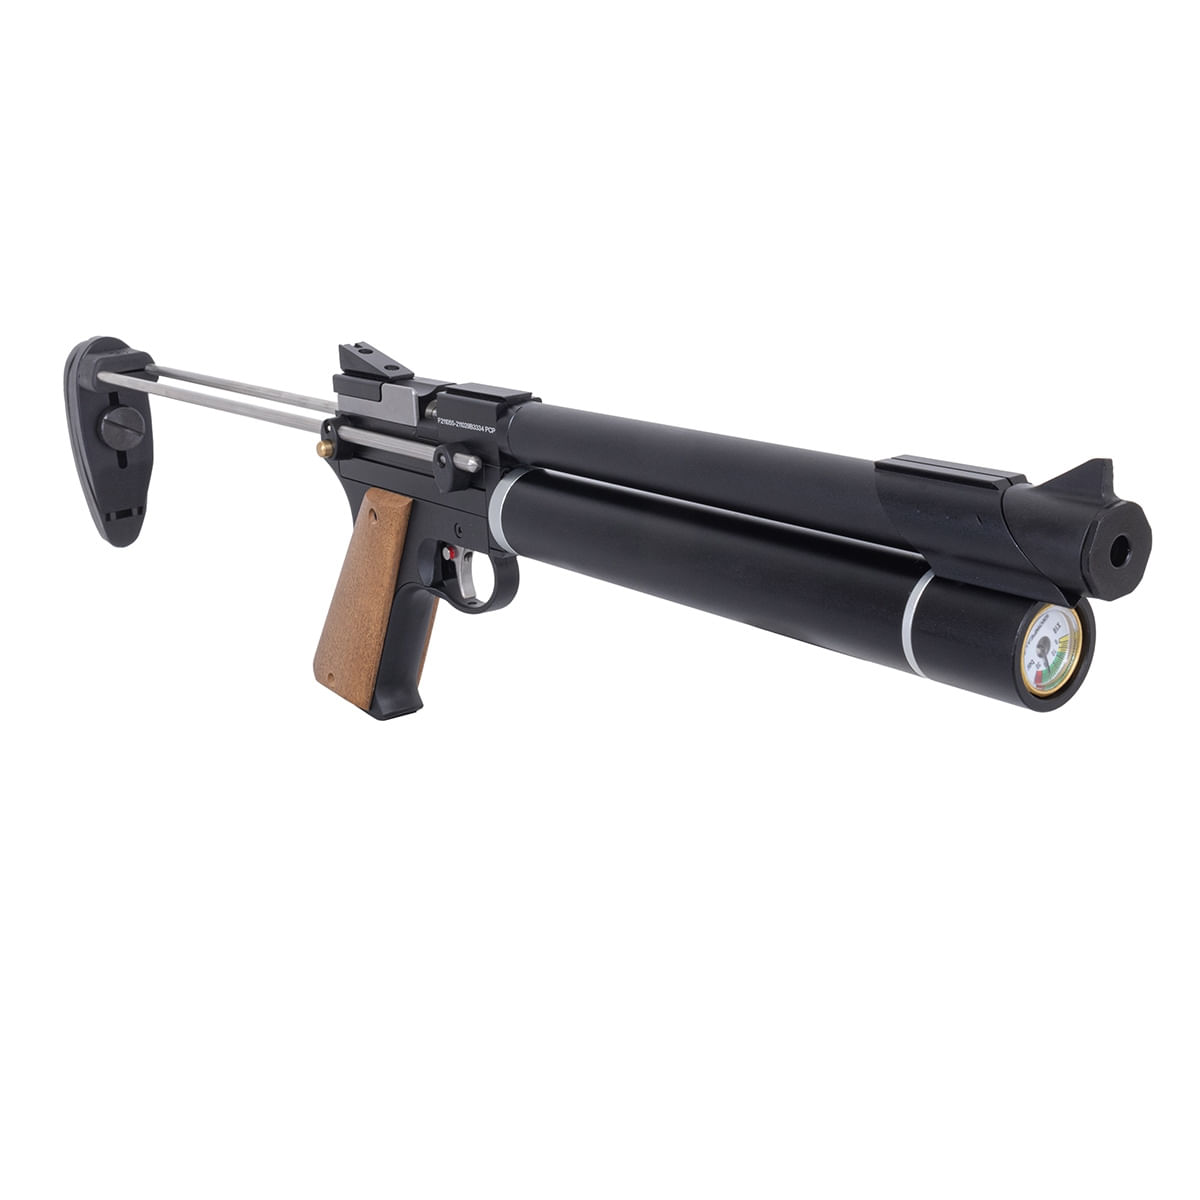 Pistola Pcp Multi-tiro Pp750 5.5 Artemis/500fps + Bombin Pcp